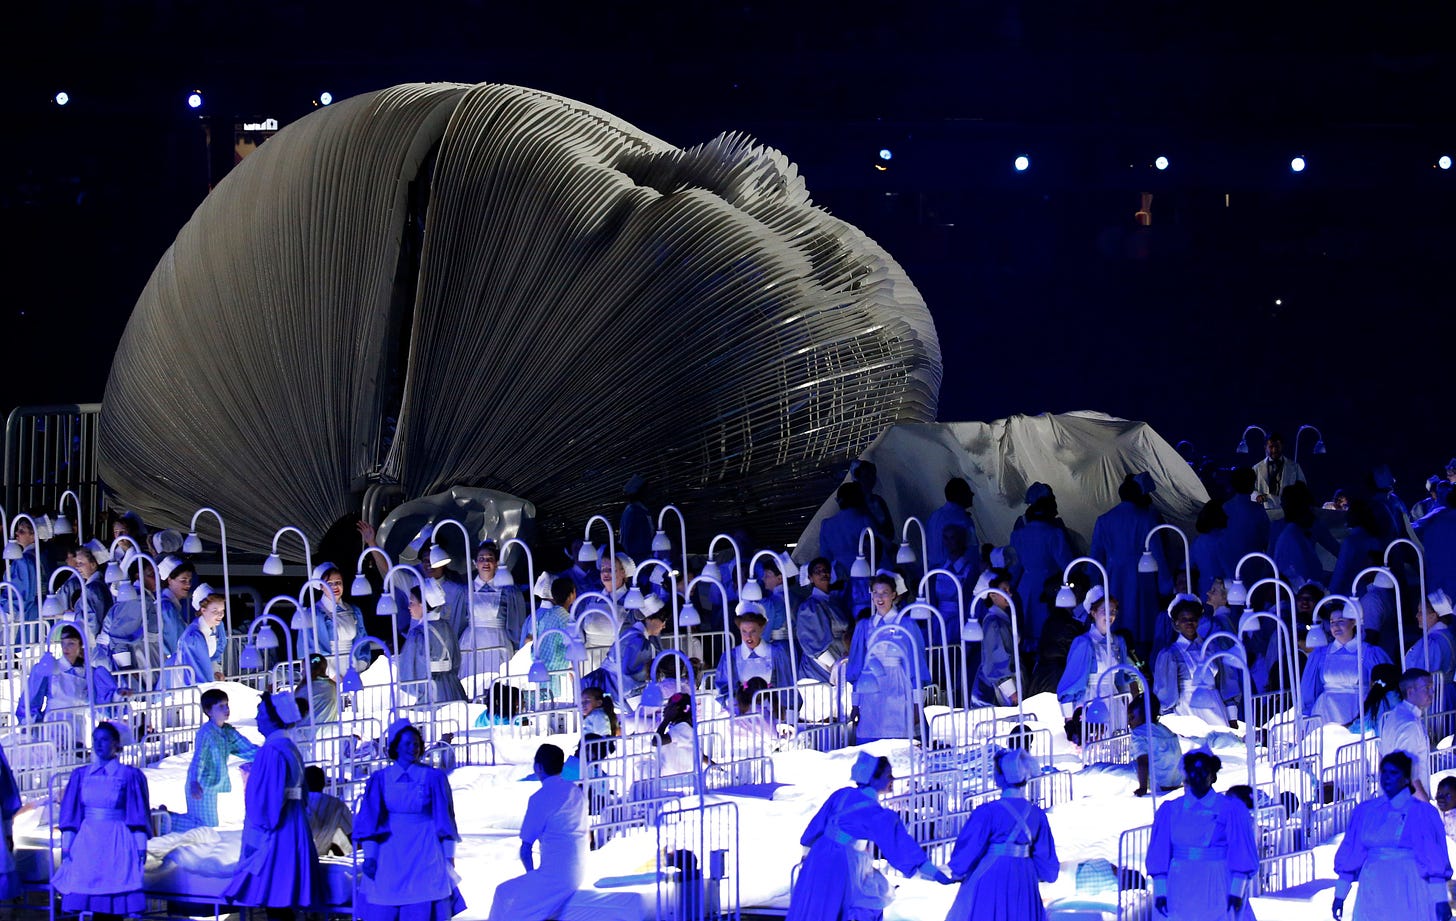 Fact check: London Olympics ceremony did not predict the coronavirus